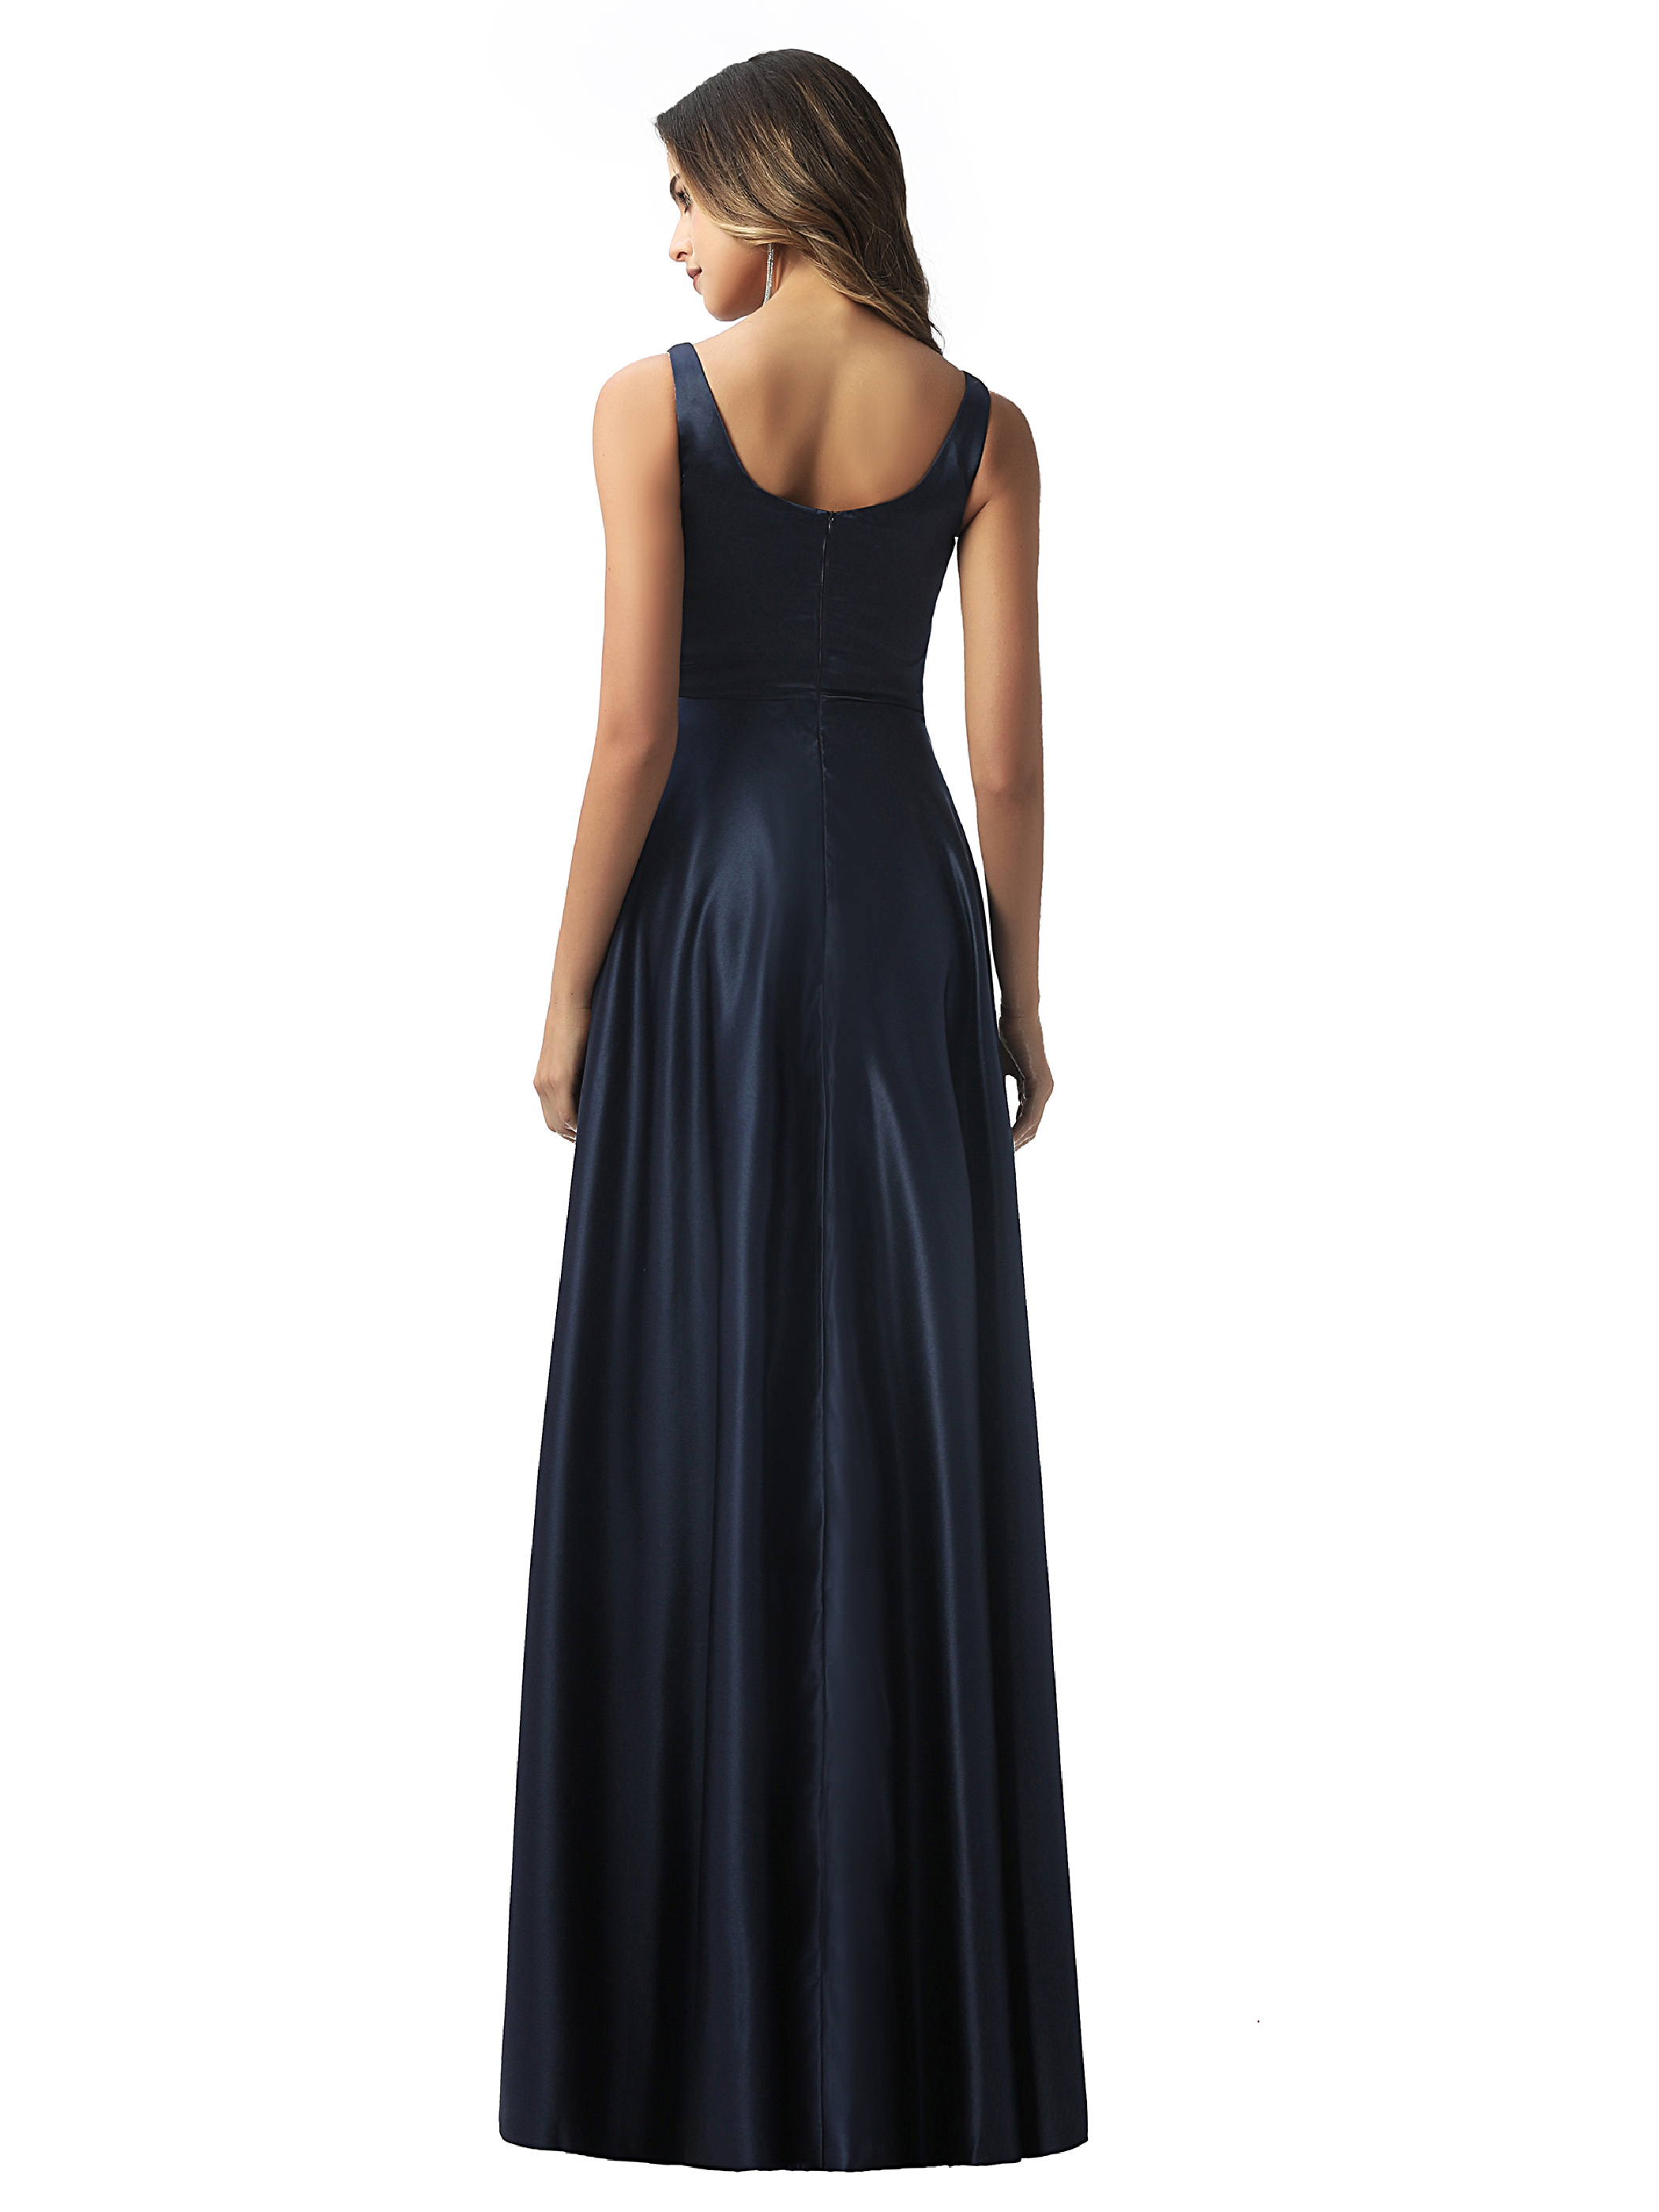 Ericdress Sleeveless Straps Floor-Length A-Line Prom Dress